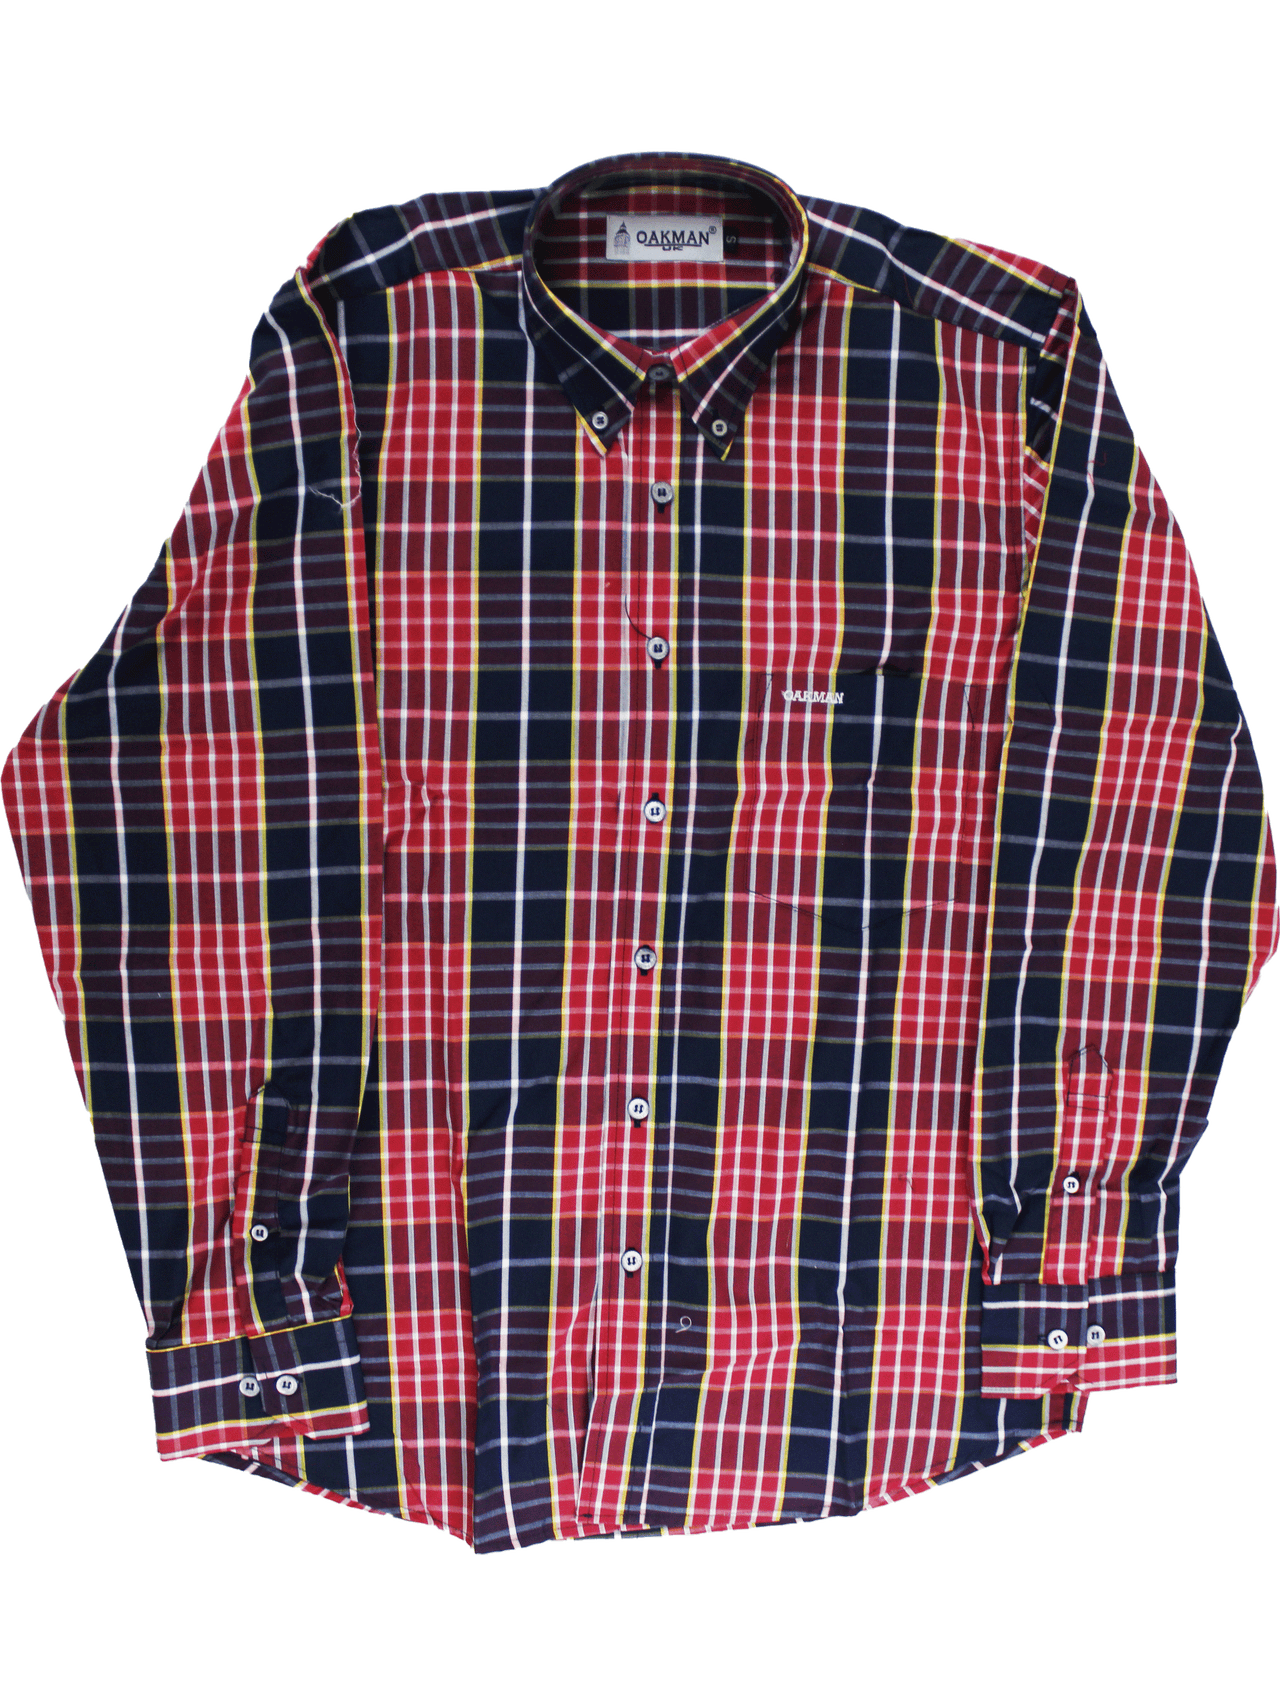 OAKMAN Red Checkered L/S Shirt